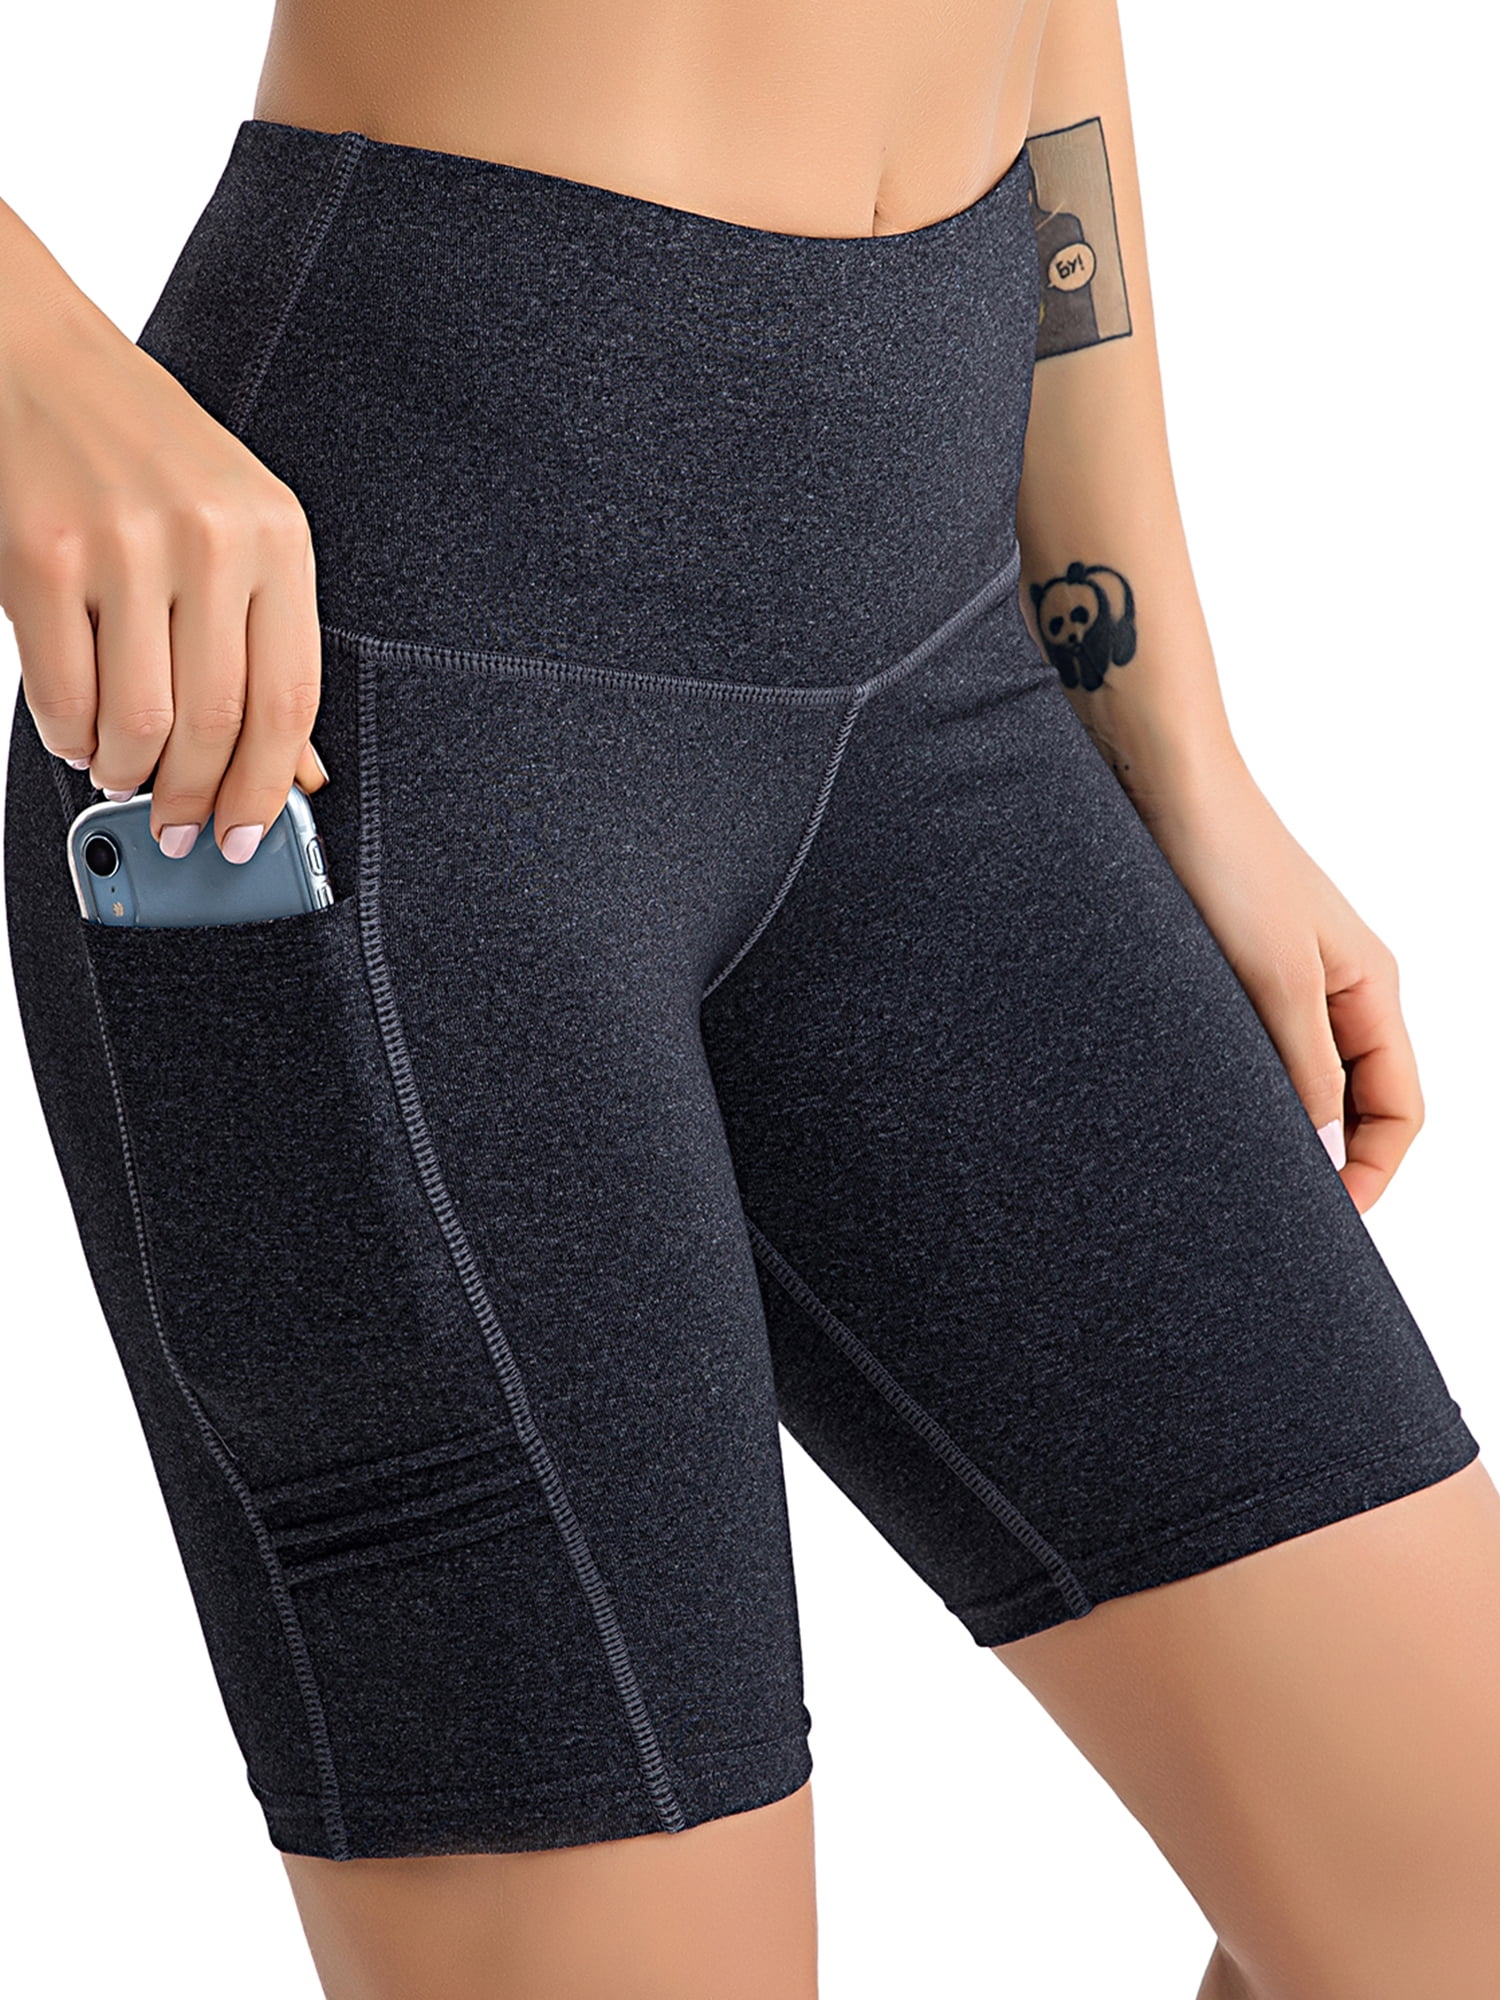 MUUBOOX Biker Shorts for Women High Waist Tummy Control Running Compression Yoga Shorts 